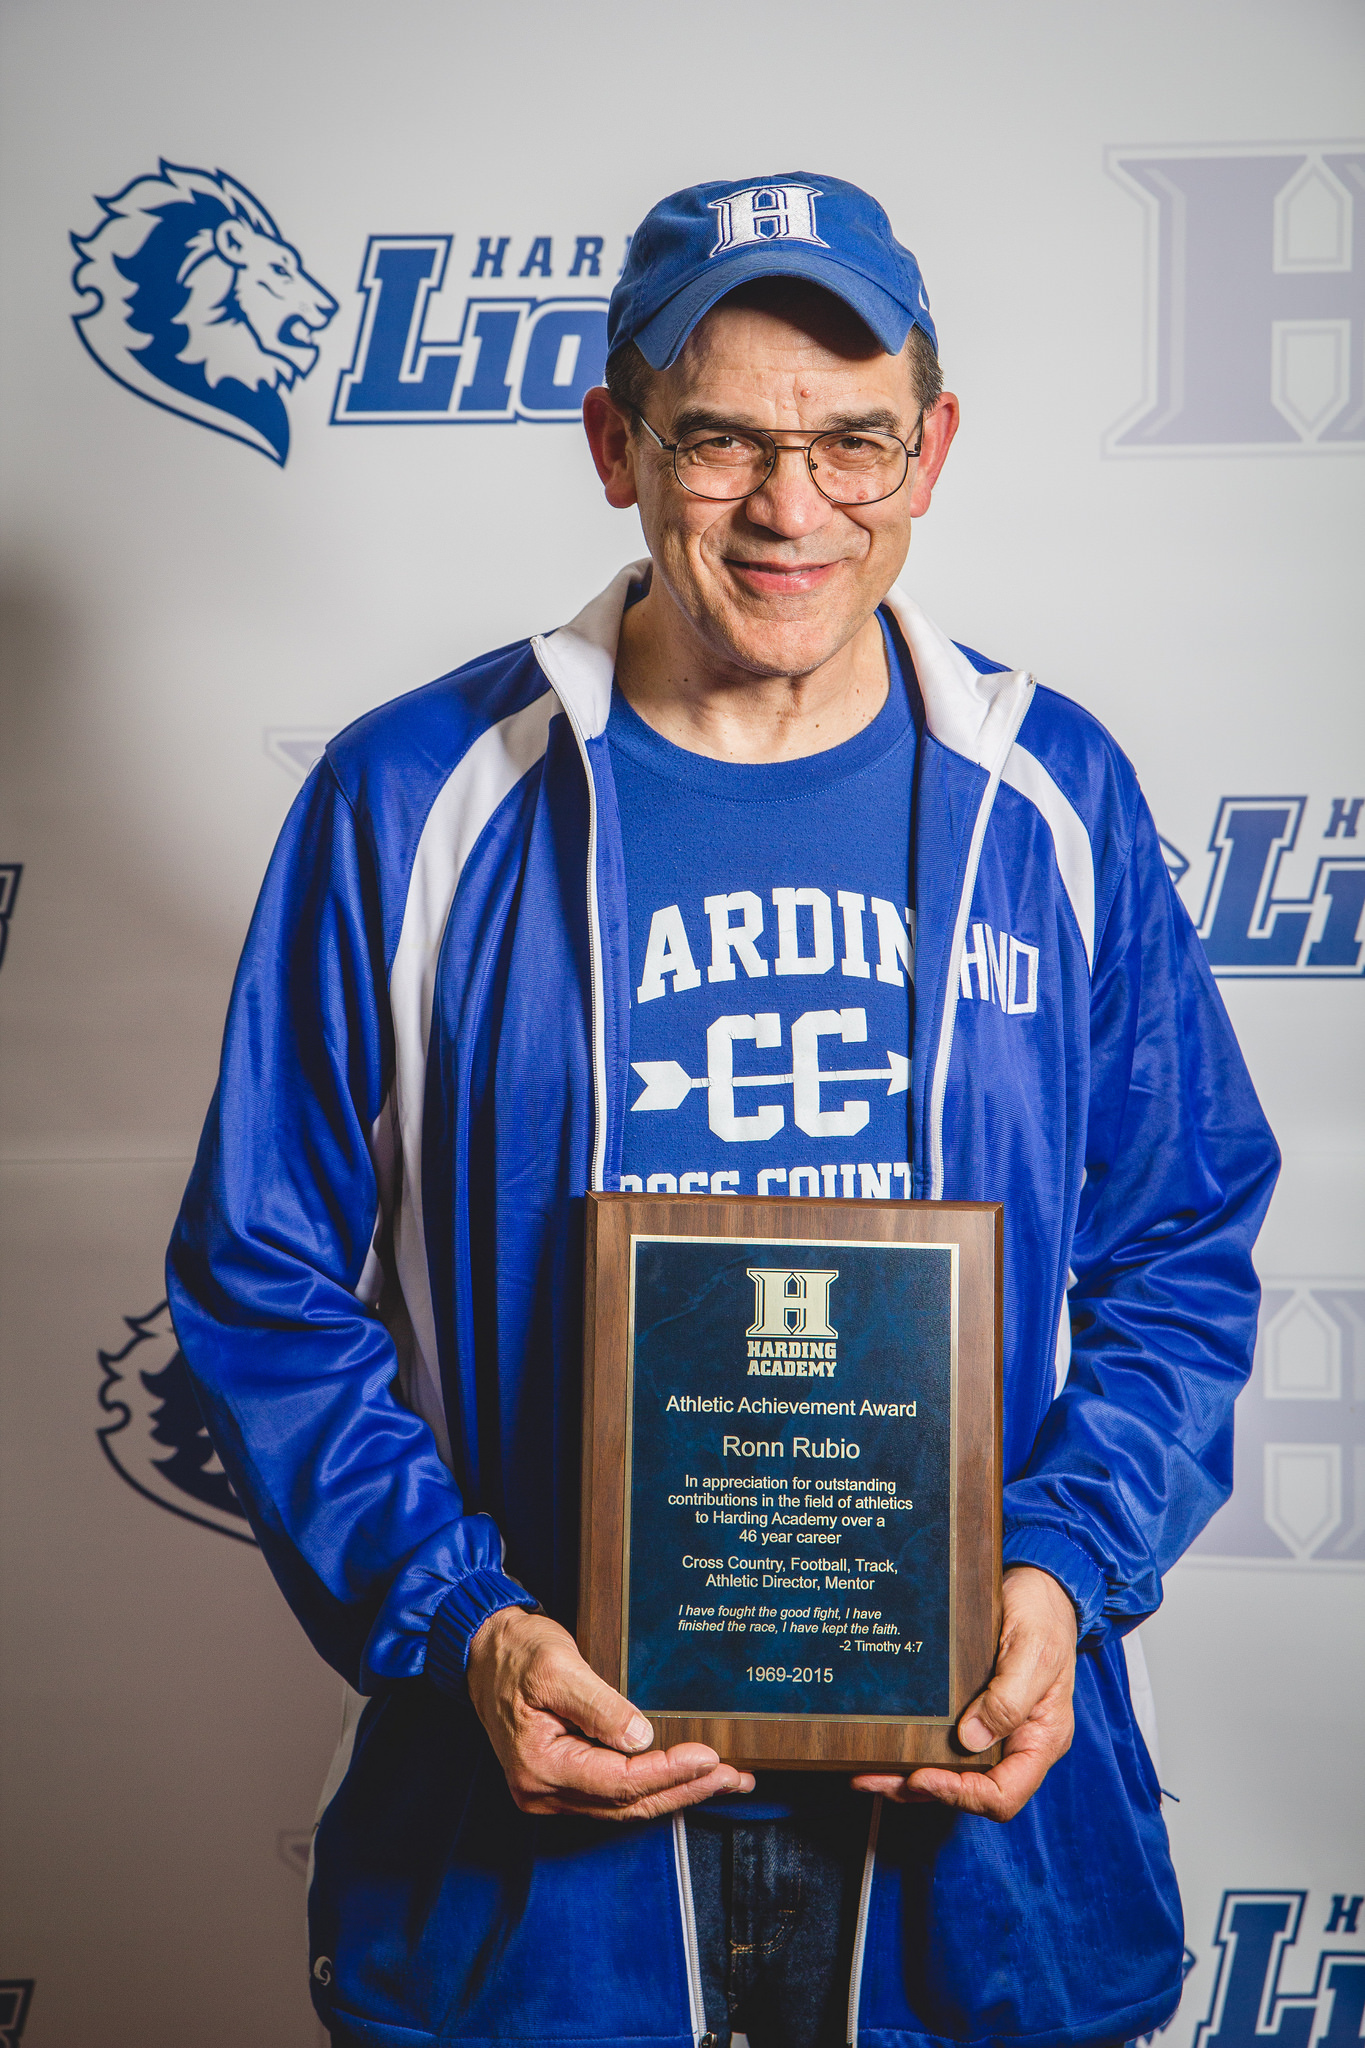 Athletic Achievement Award Ronn Rubio - 46 years